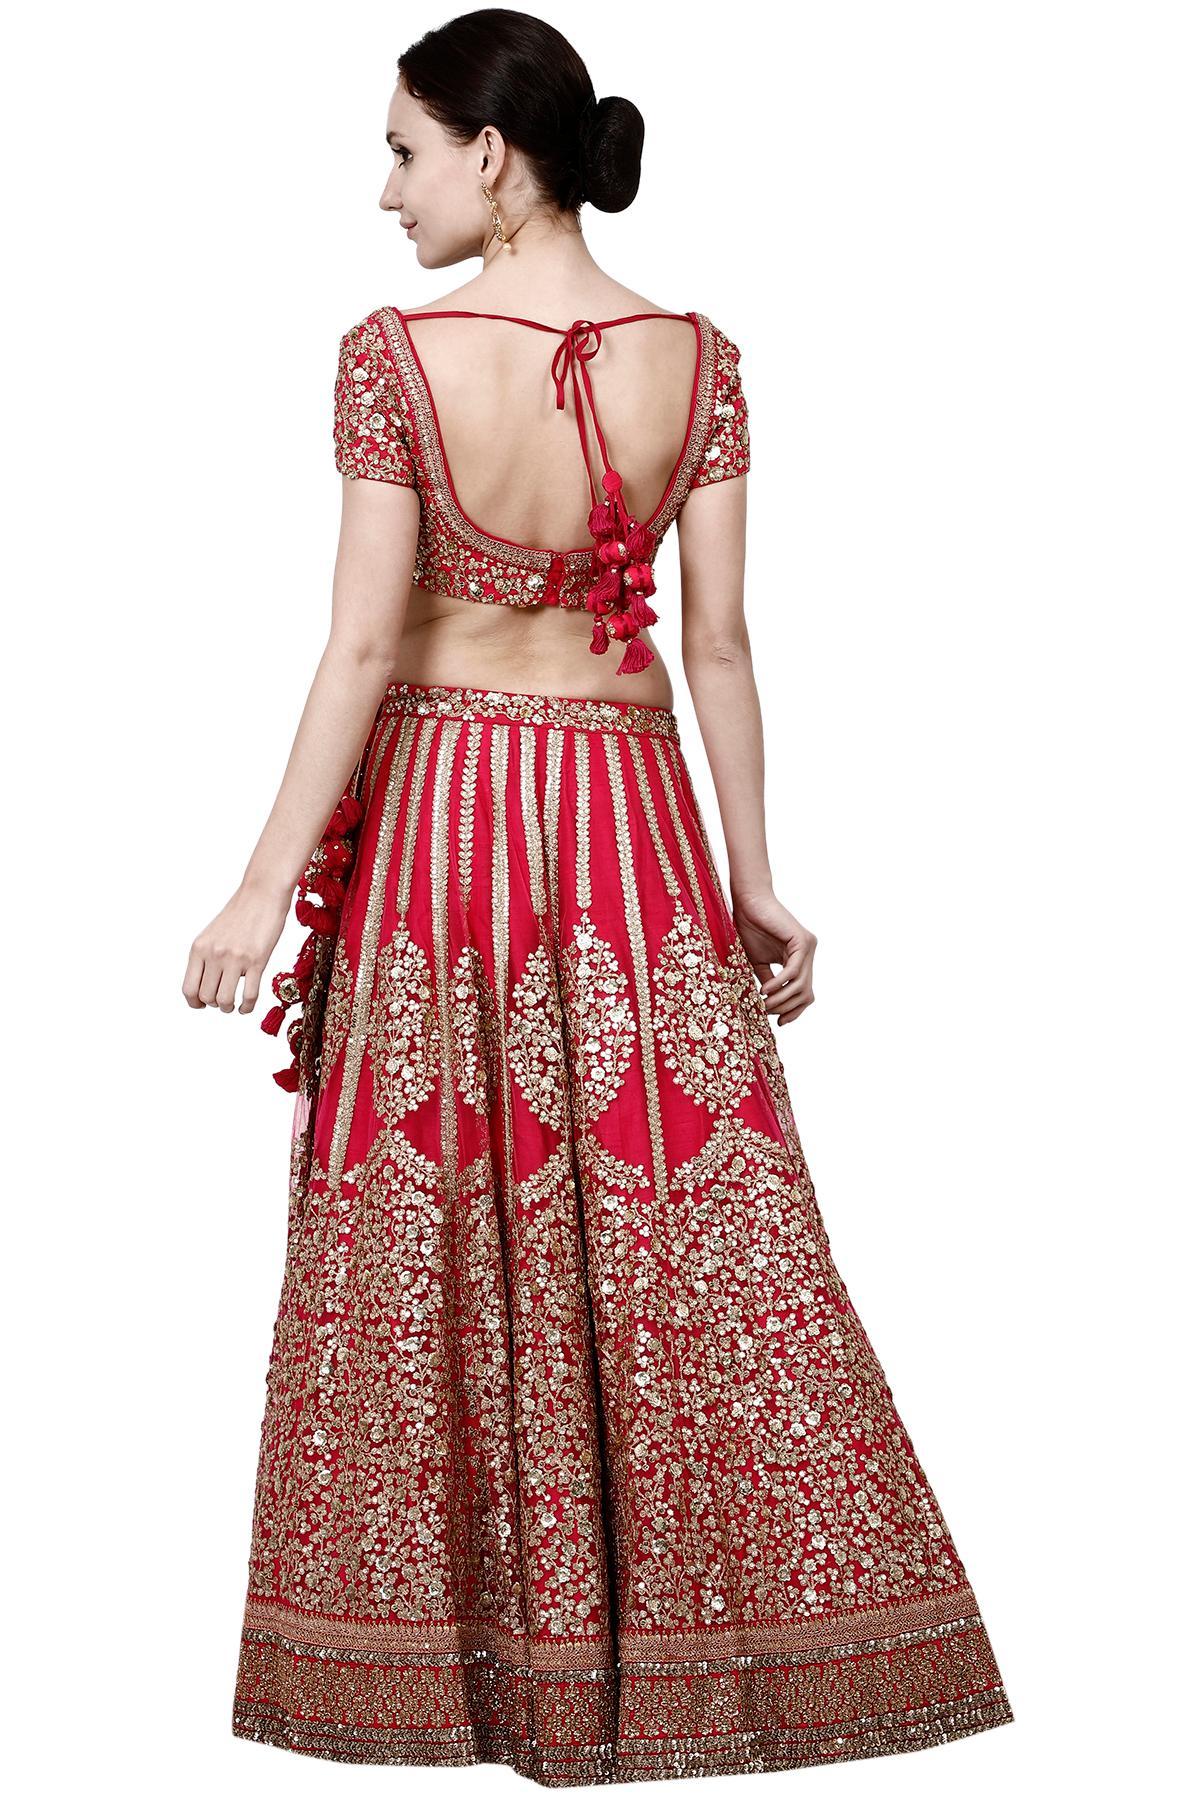 Shop Silk Fabric Based Lehenga Choli Online At Joshindia